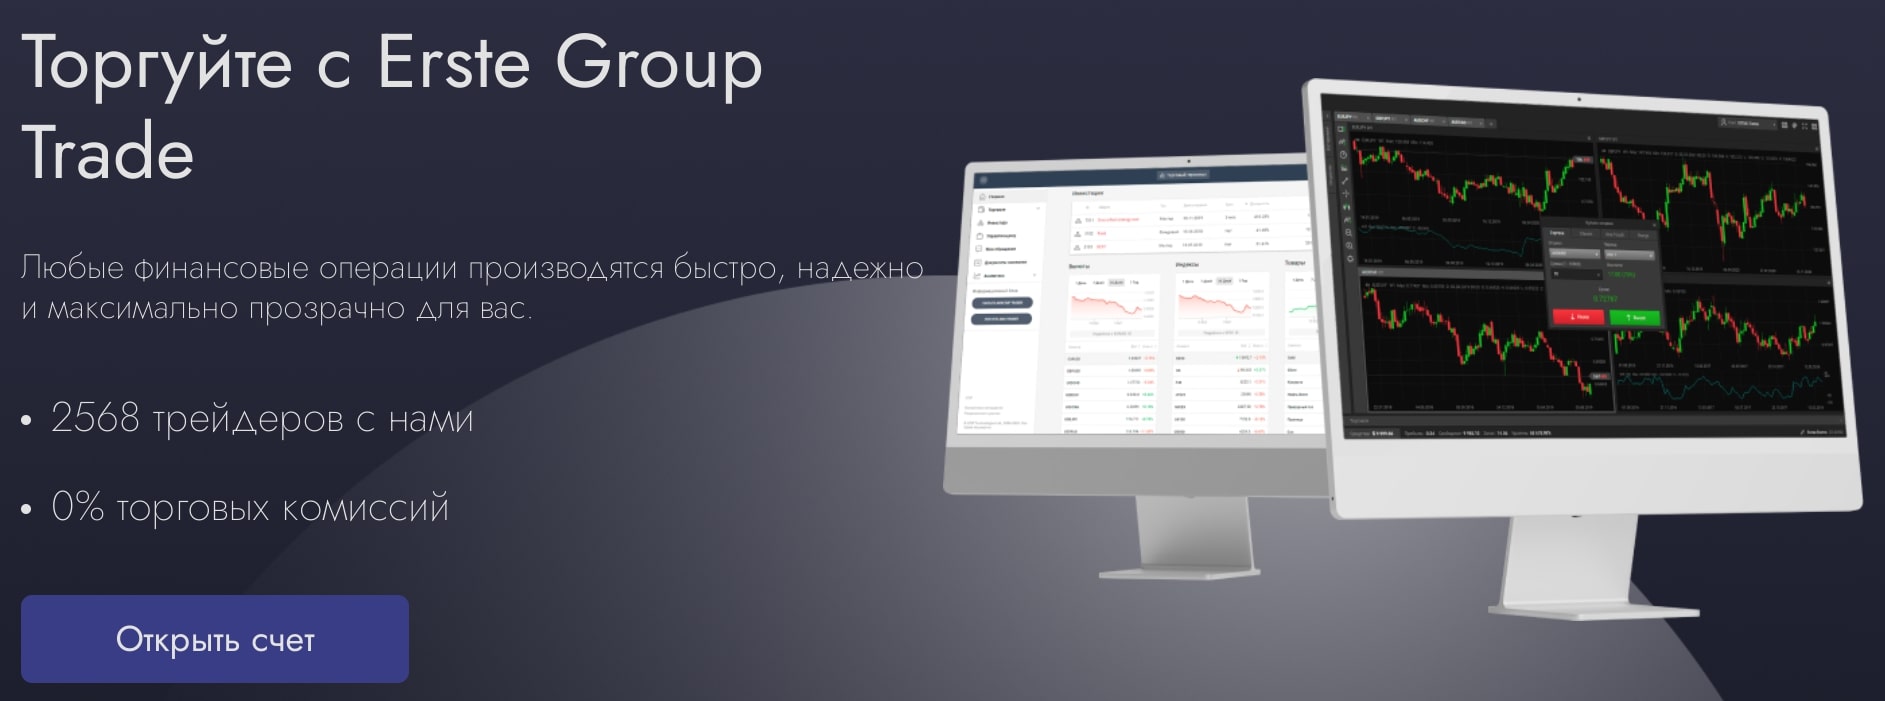 Erste Group Trade сайт